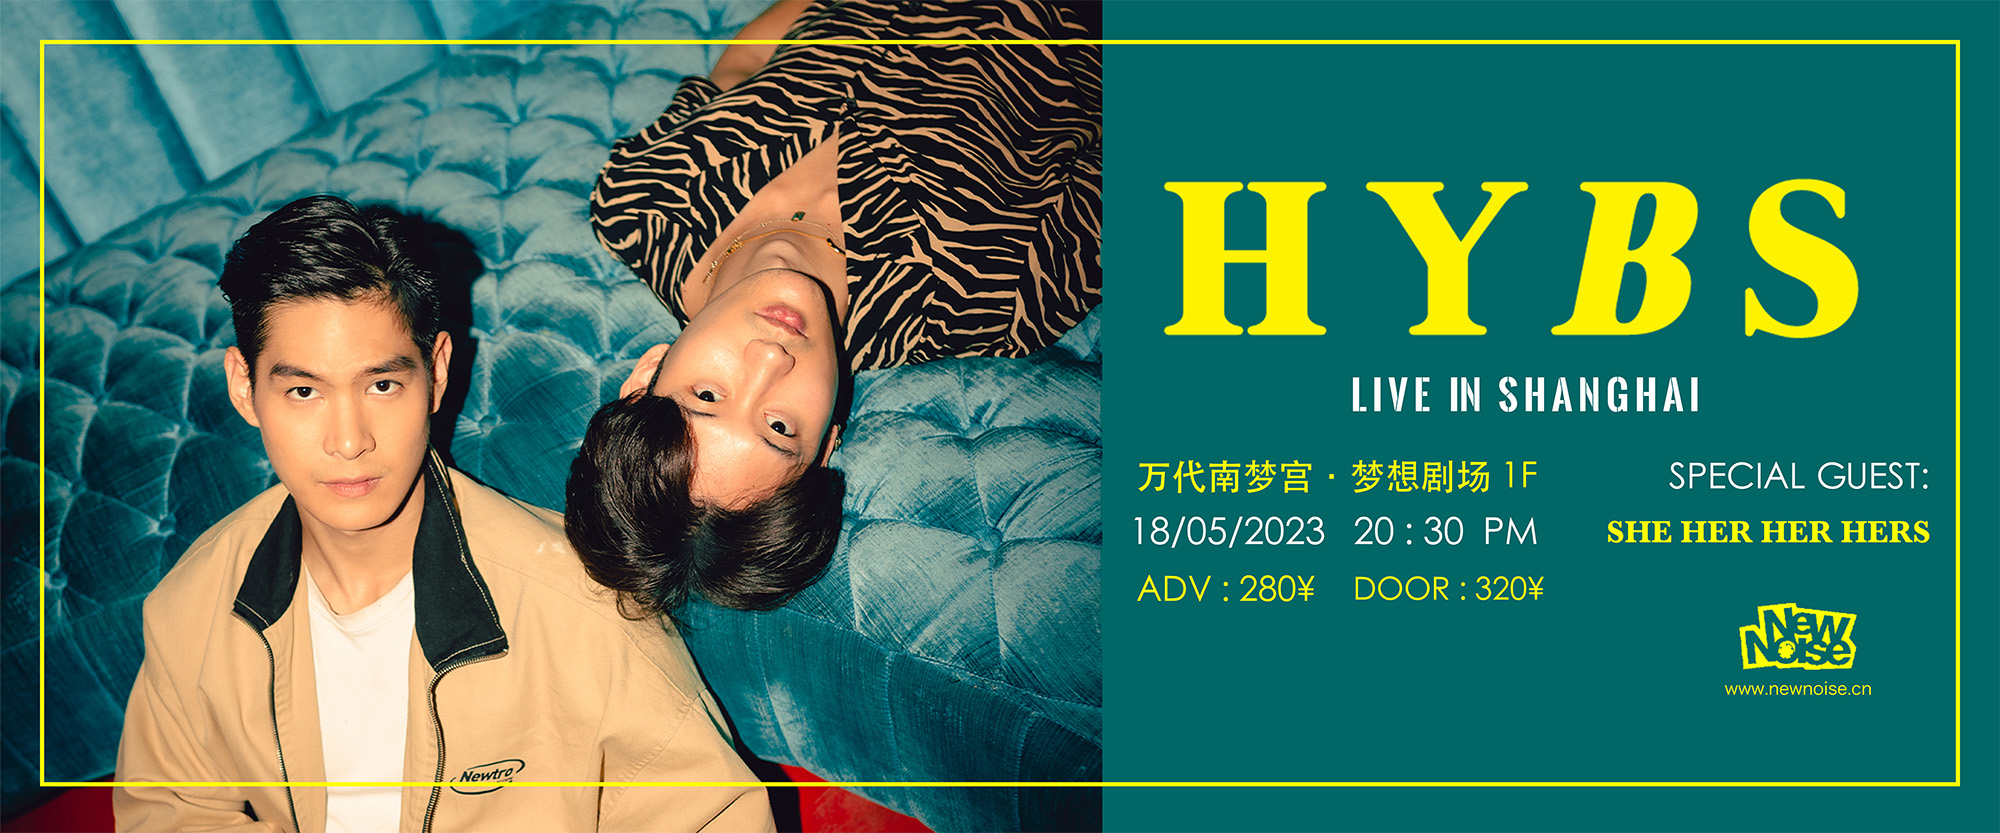 HYBS - Live in Shanghai 2023